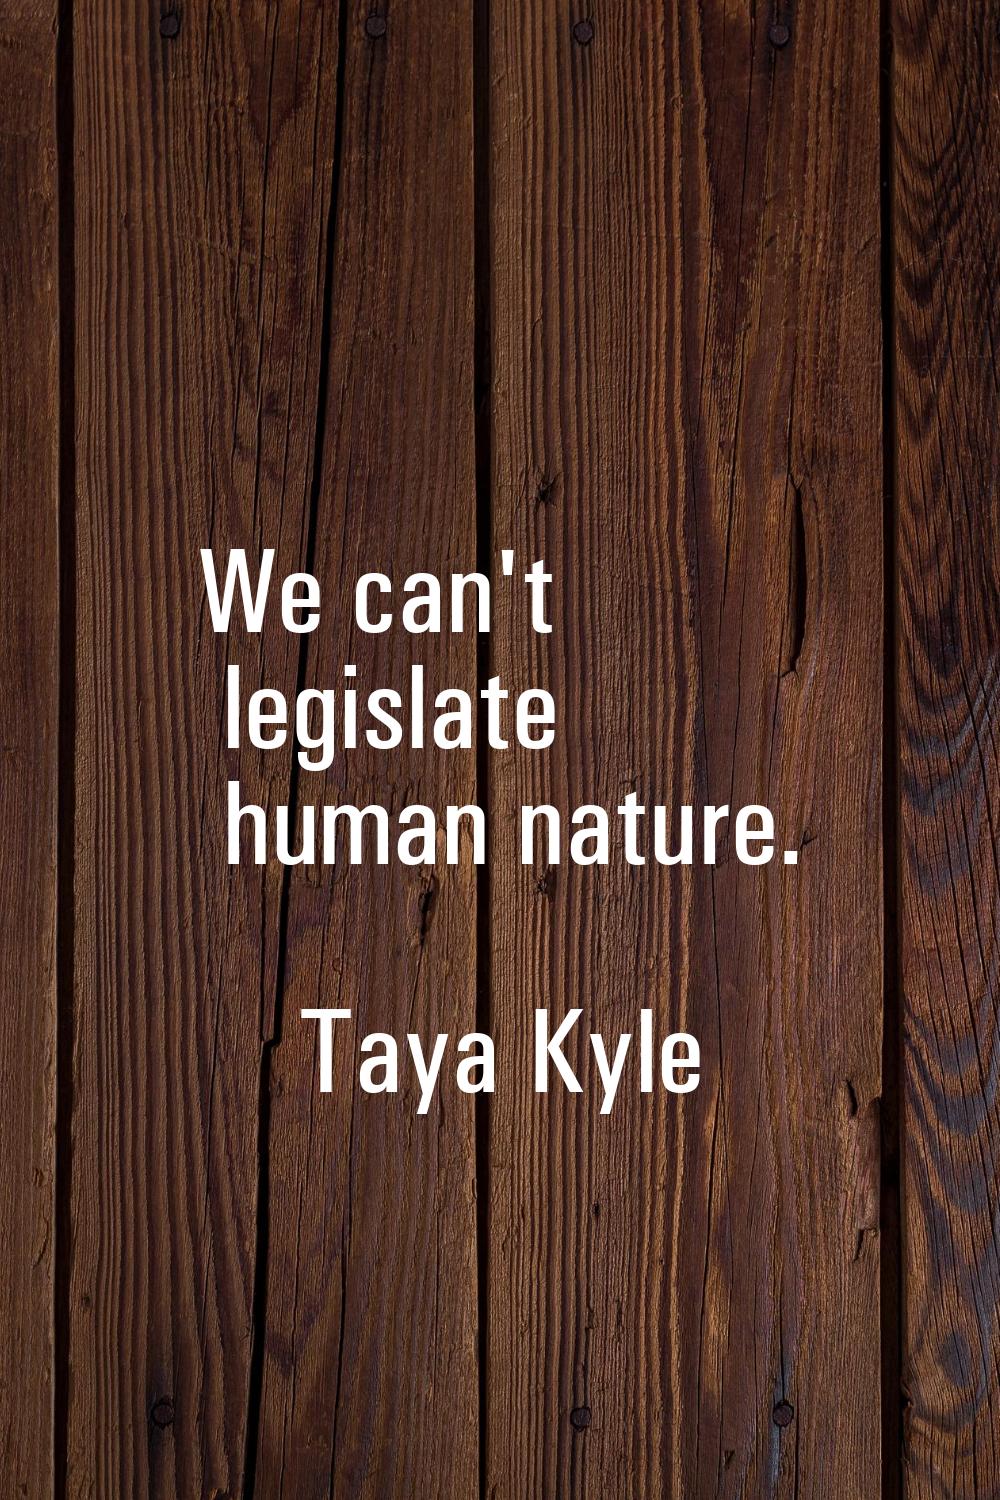 We can't legislate human nature.